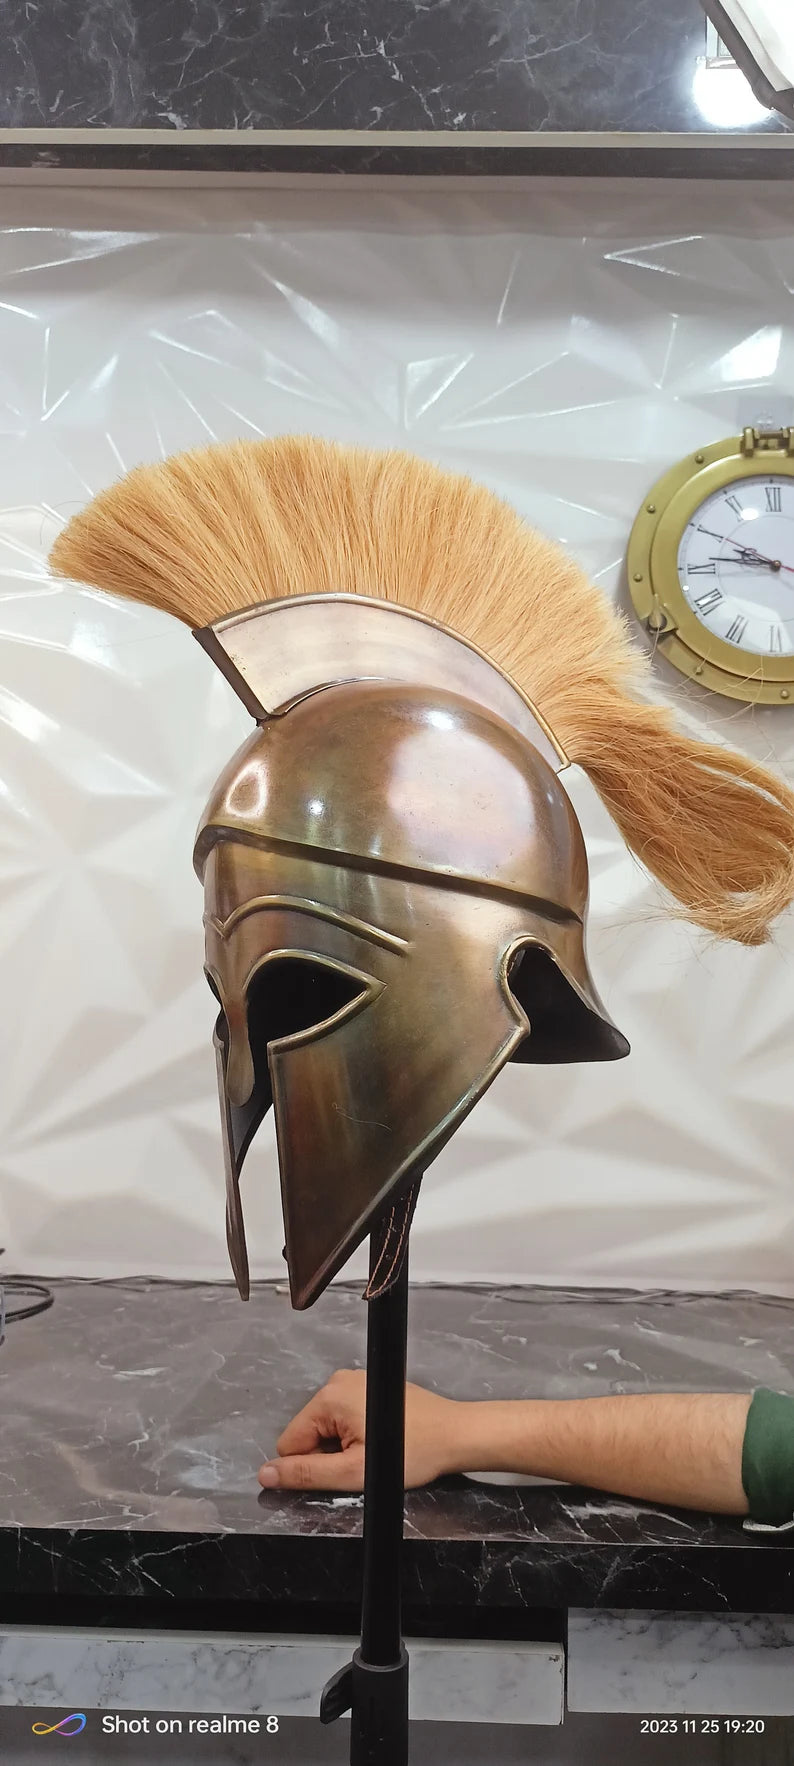 Knight Crusader Helmet | Medieval Corinthian Steel & Leather | Roman Style Armor | Unique Christmas Gift Item